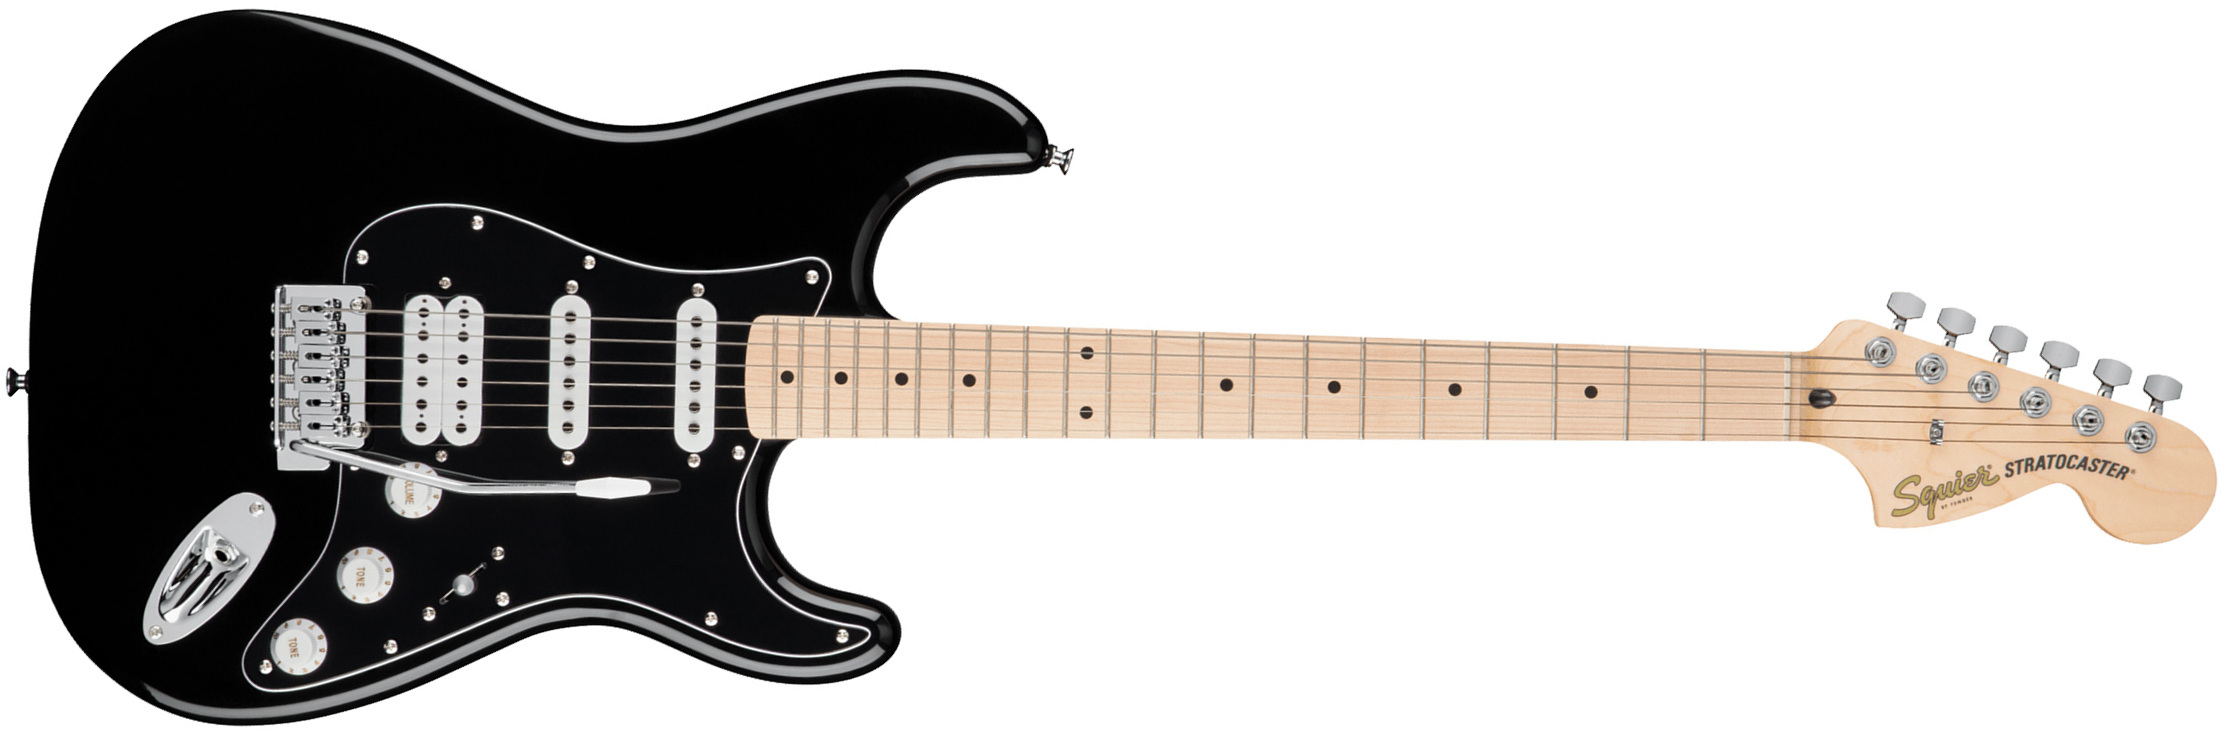 Squier Strat Affinity Black Pickguard Fsr Ltd Hss Trem Lau - Black - Str shape electric guitar - Main picture